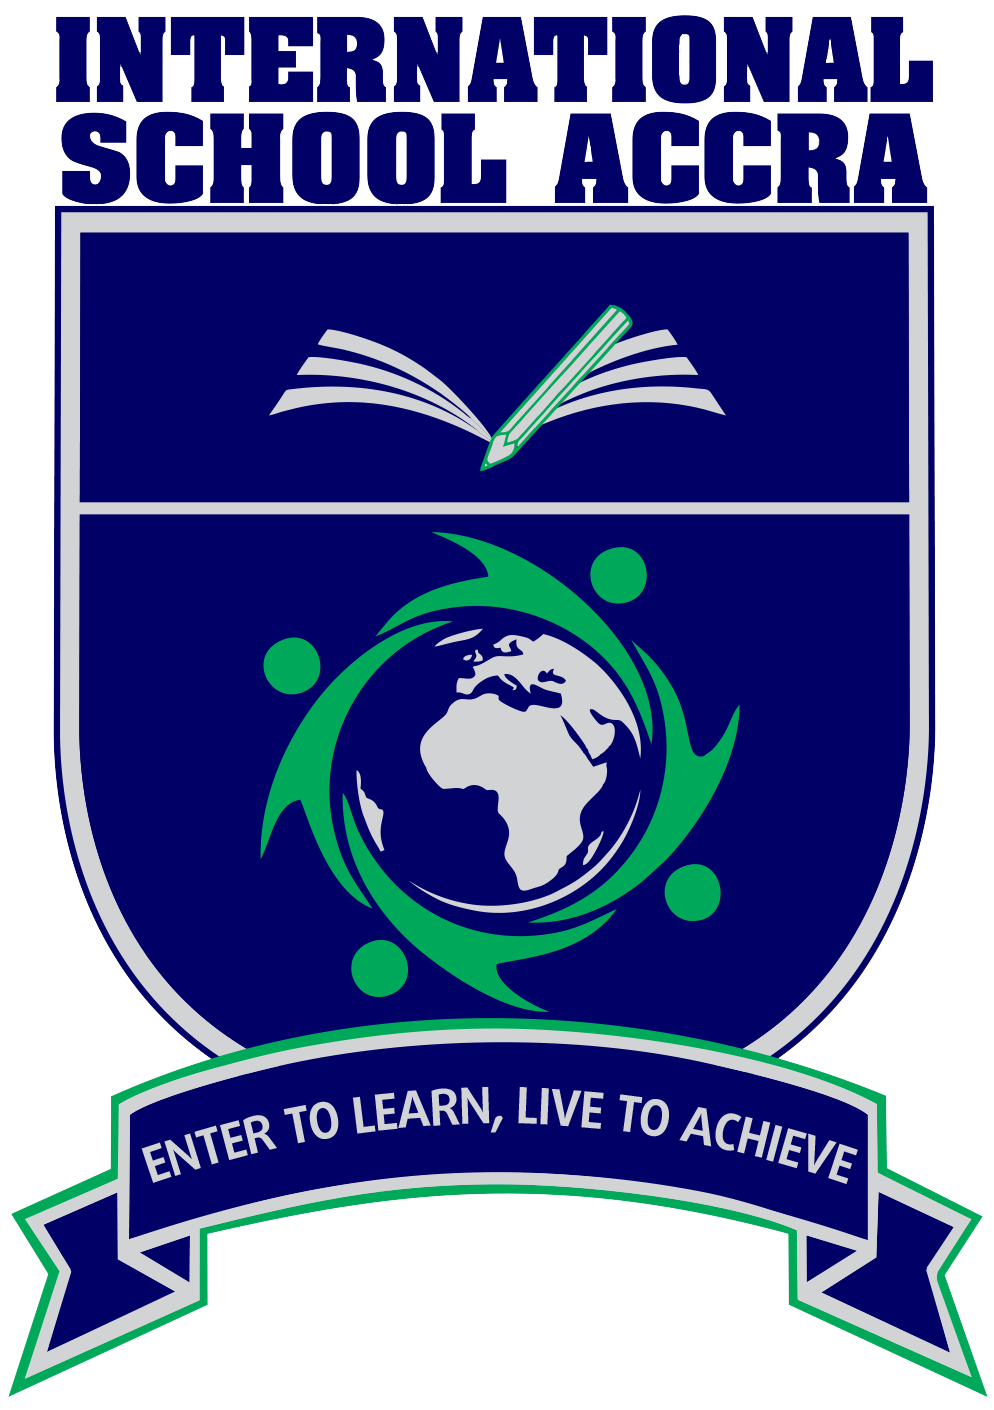 International School of Accra